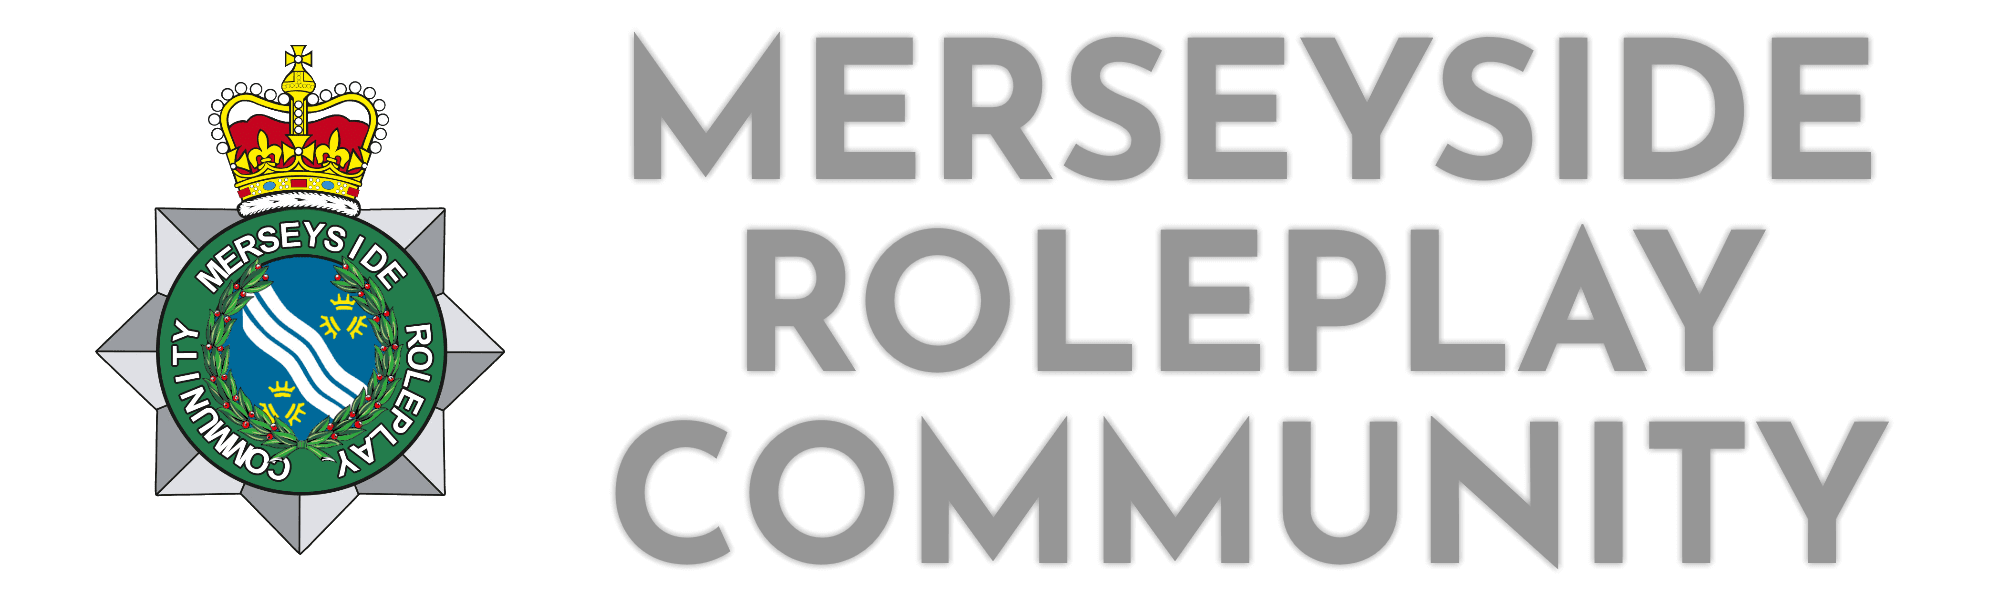 Merseyside Roleplay Community